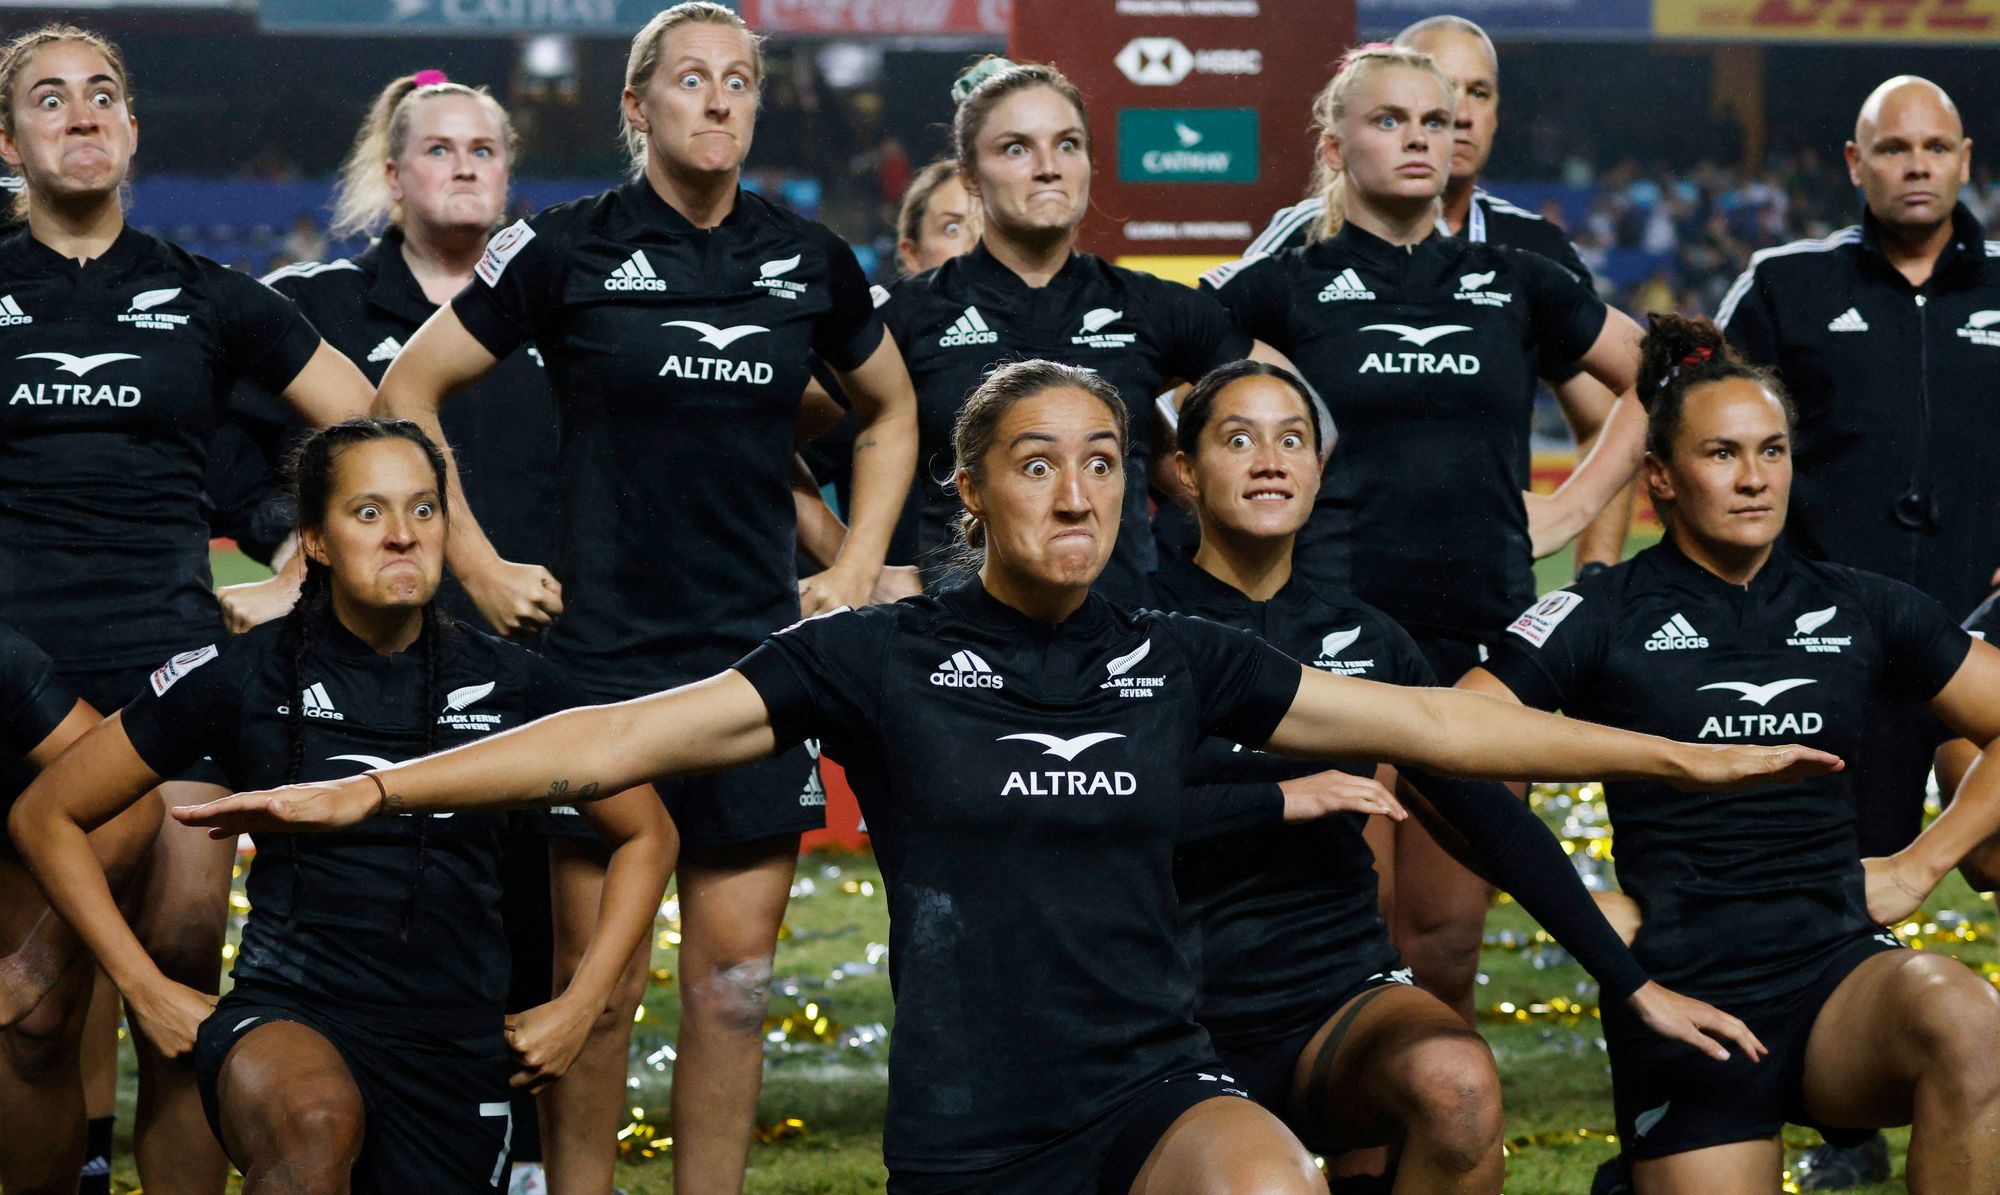 New Zealand women's team won gold at the Hong Kong rugby Sevens